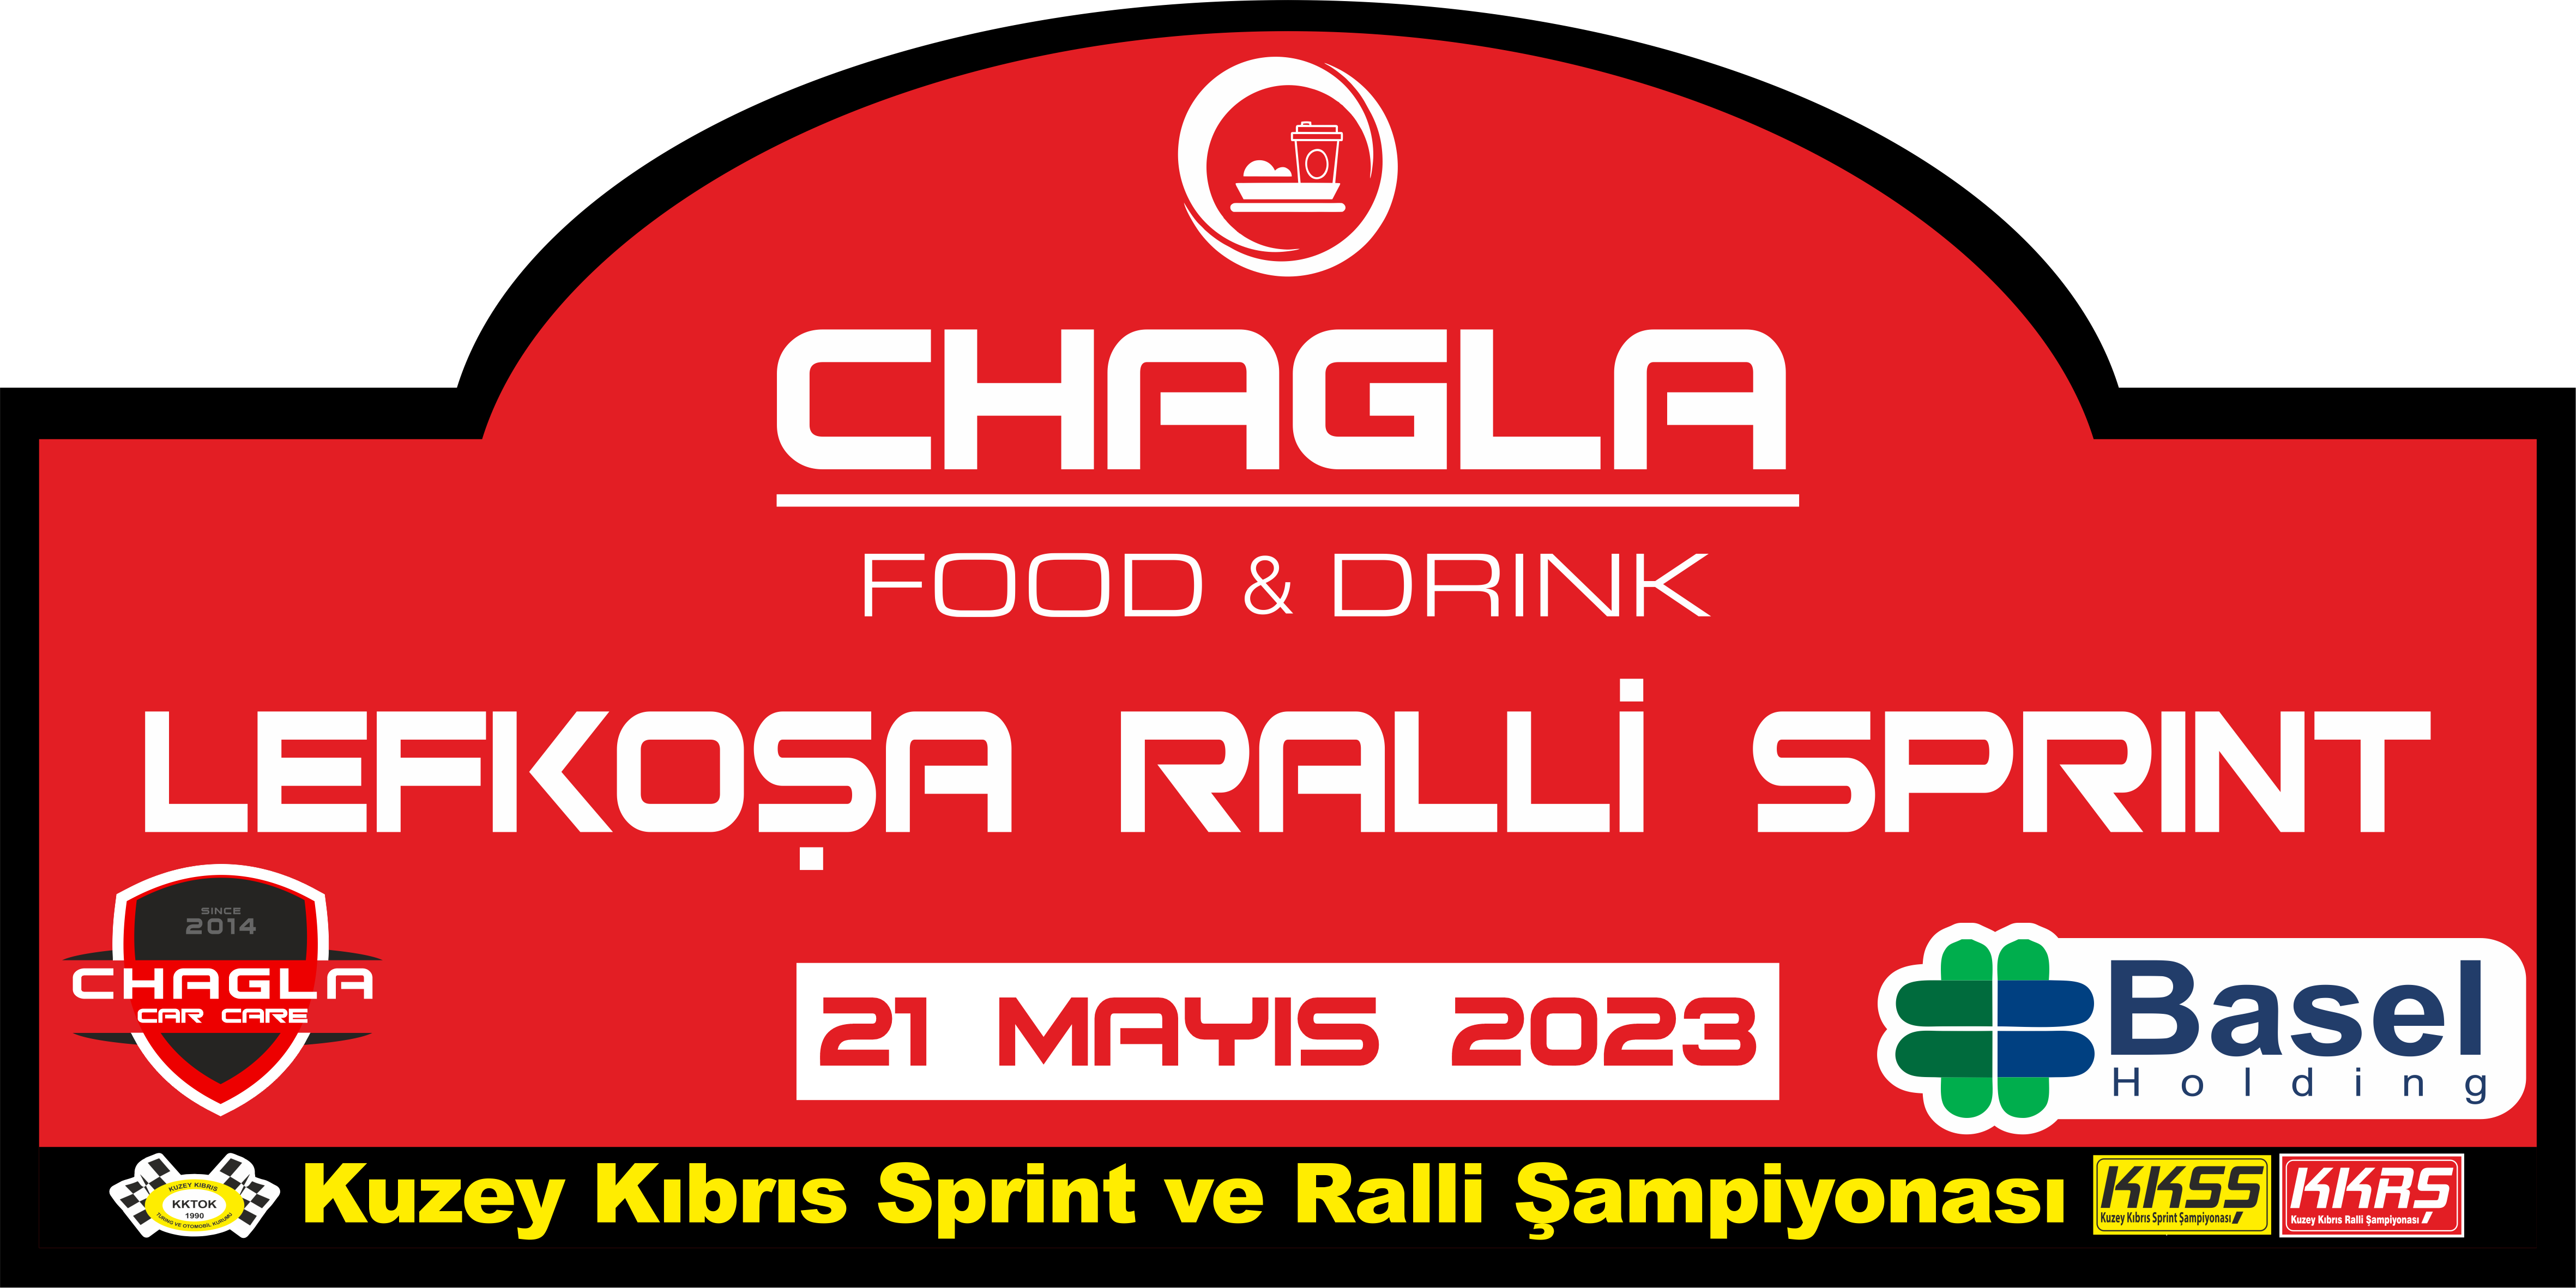 Chagla Logo